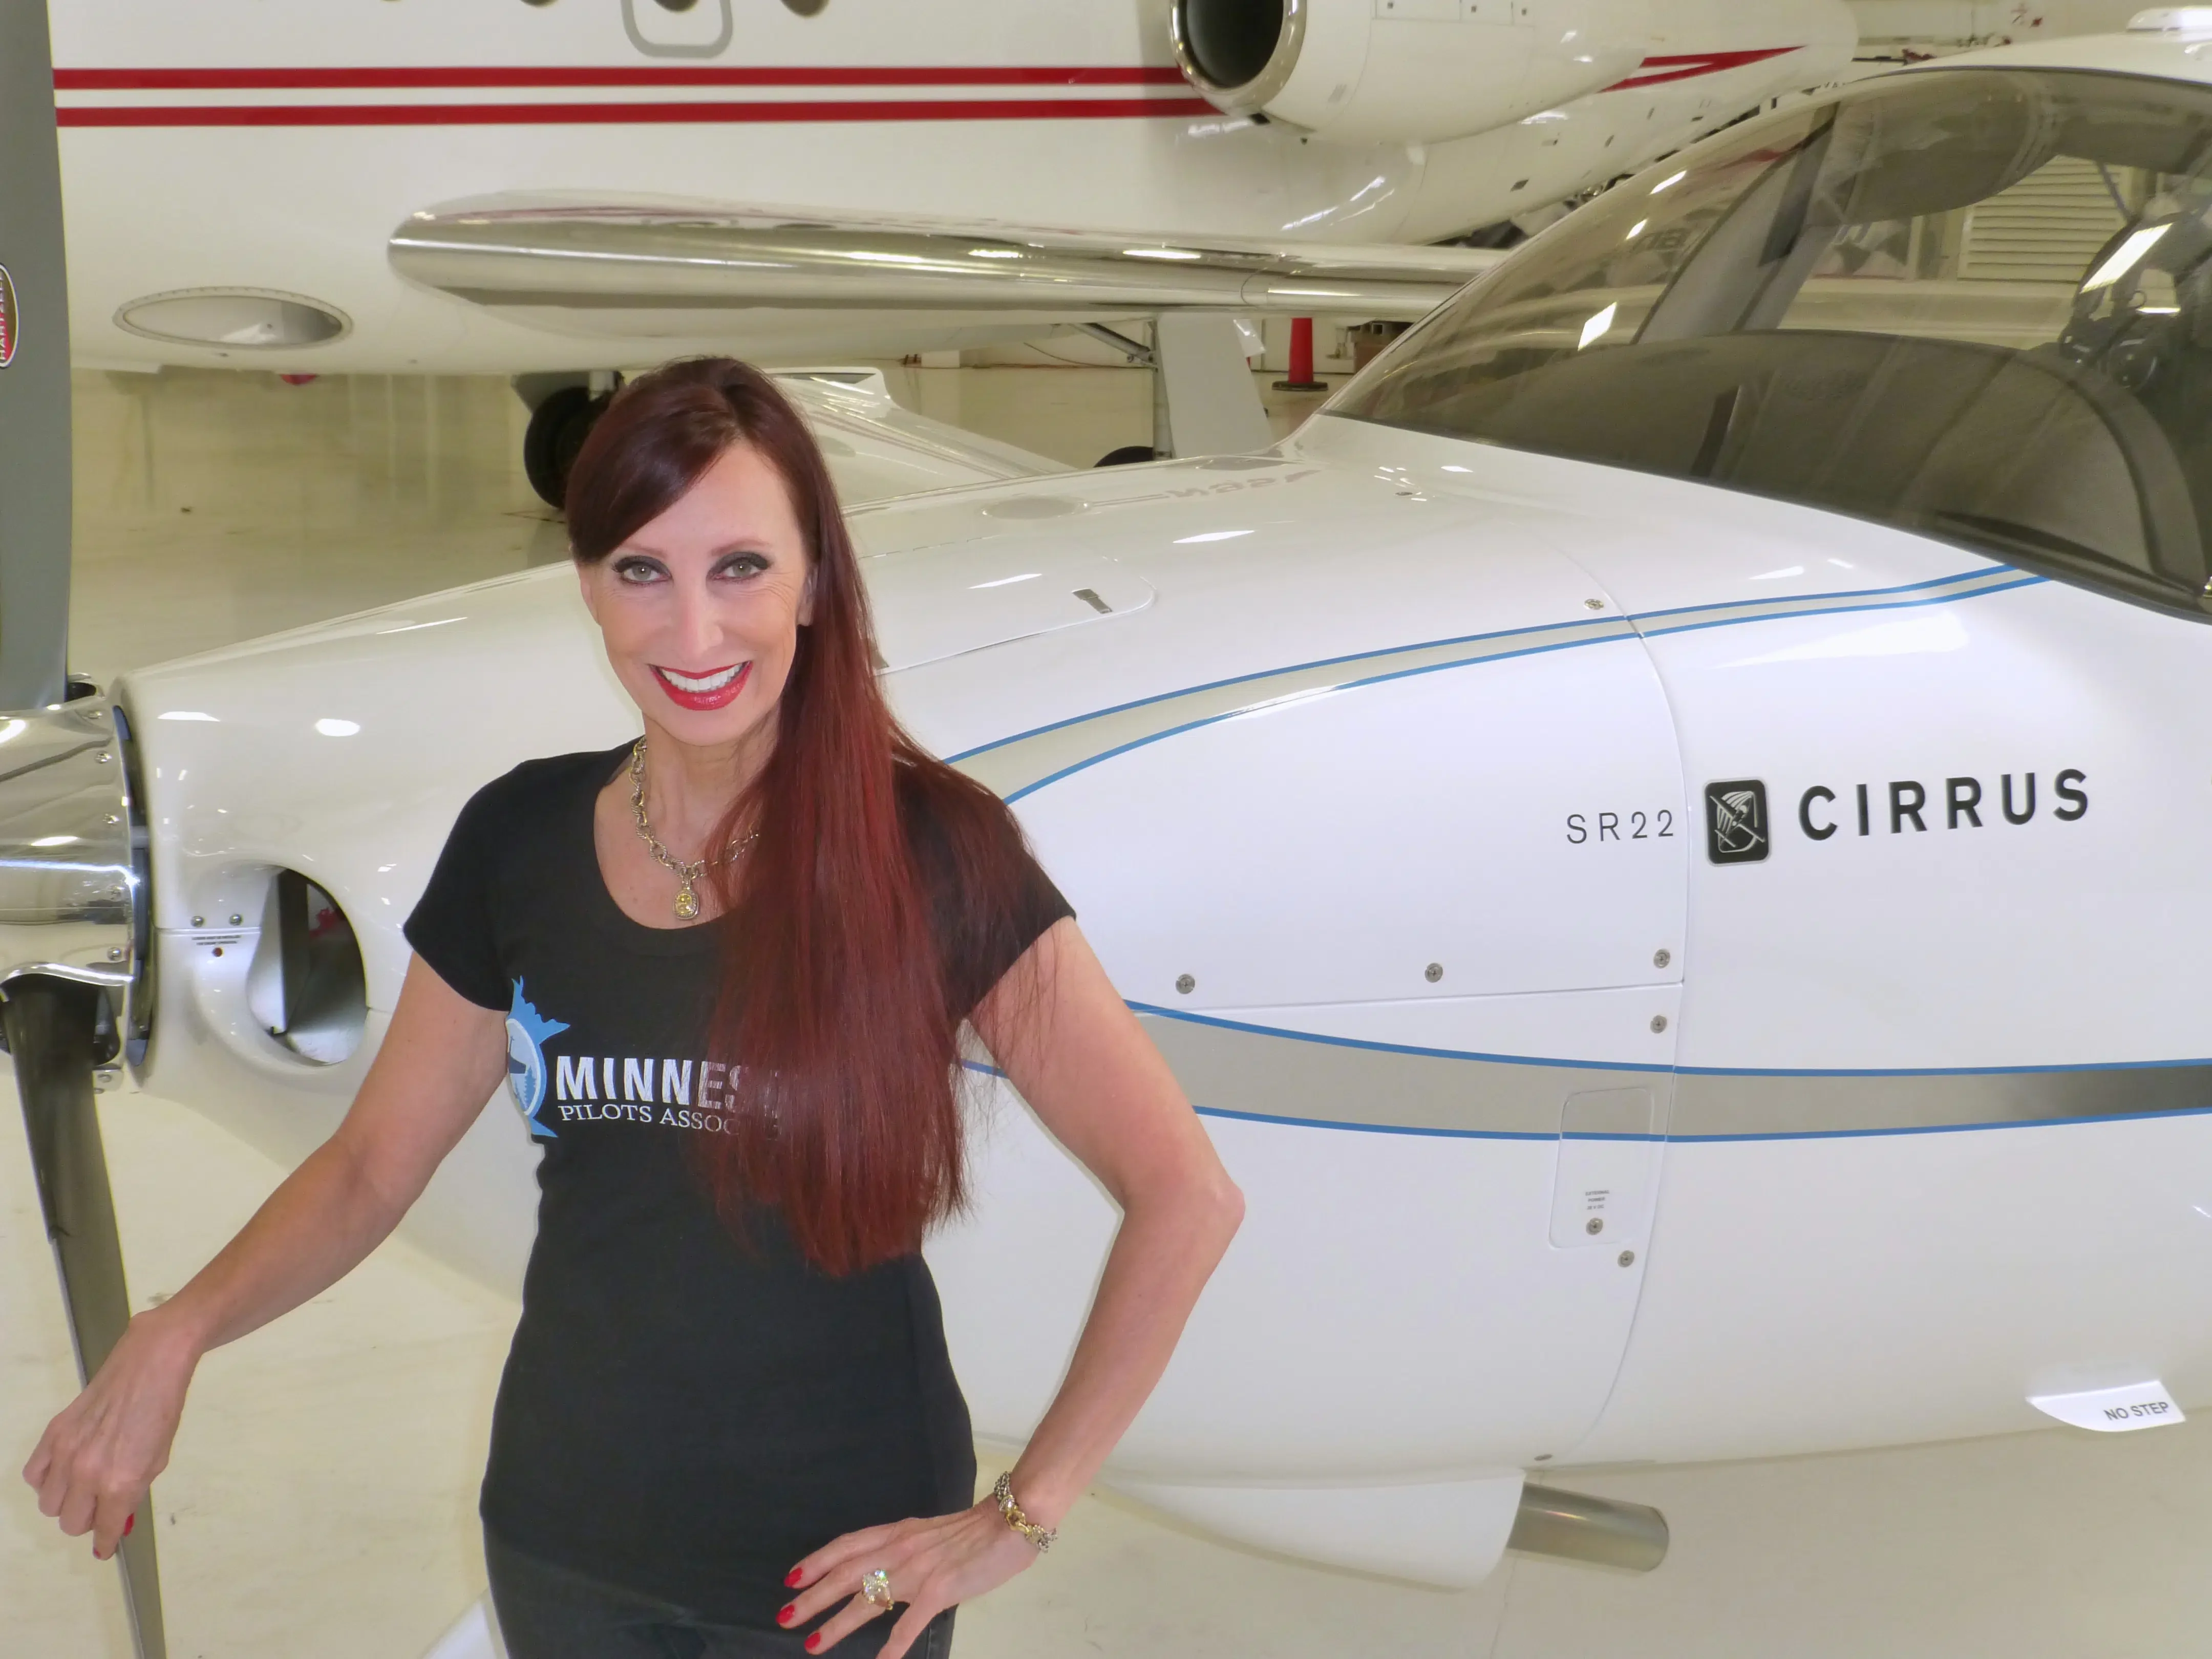 Tracy Lovness’ Cirrus is an Air Race Flyer